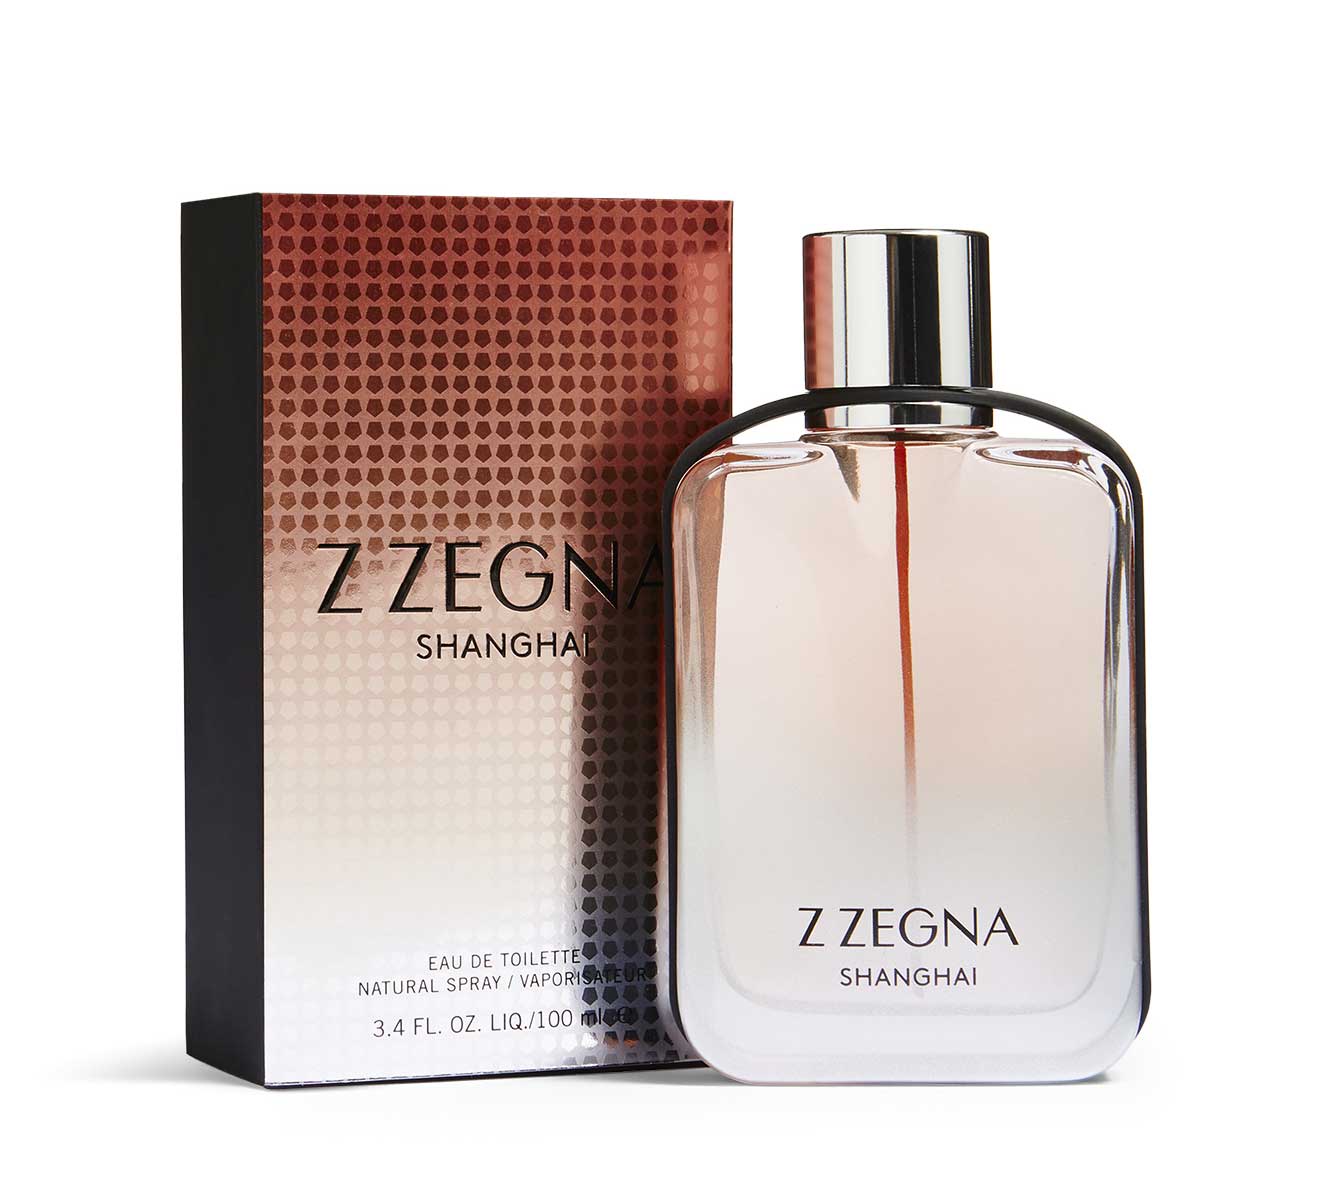 Z Zegna Shanghai Ermenegildo Zegna cologne - a new fragrance for men 2016